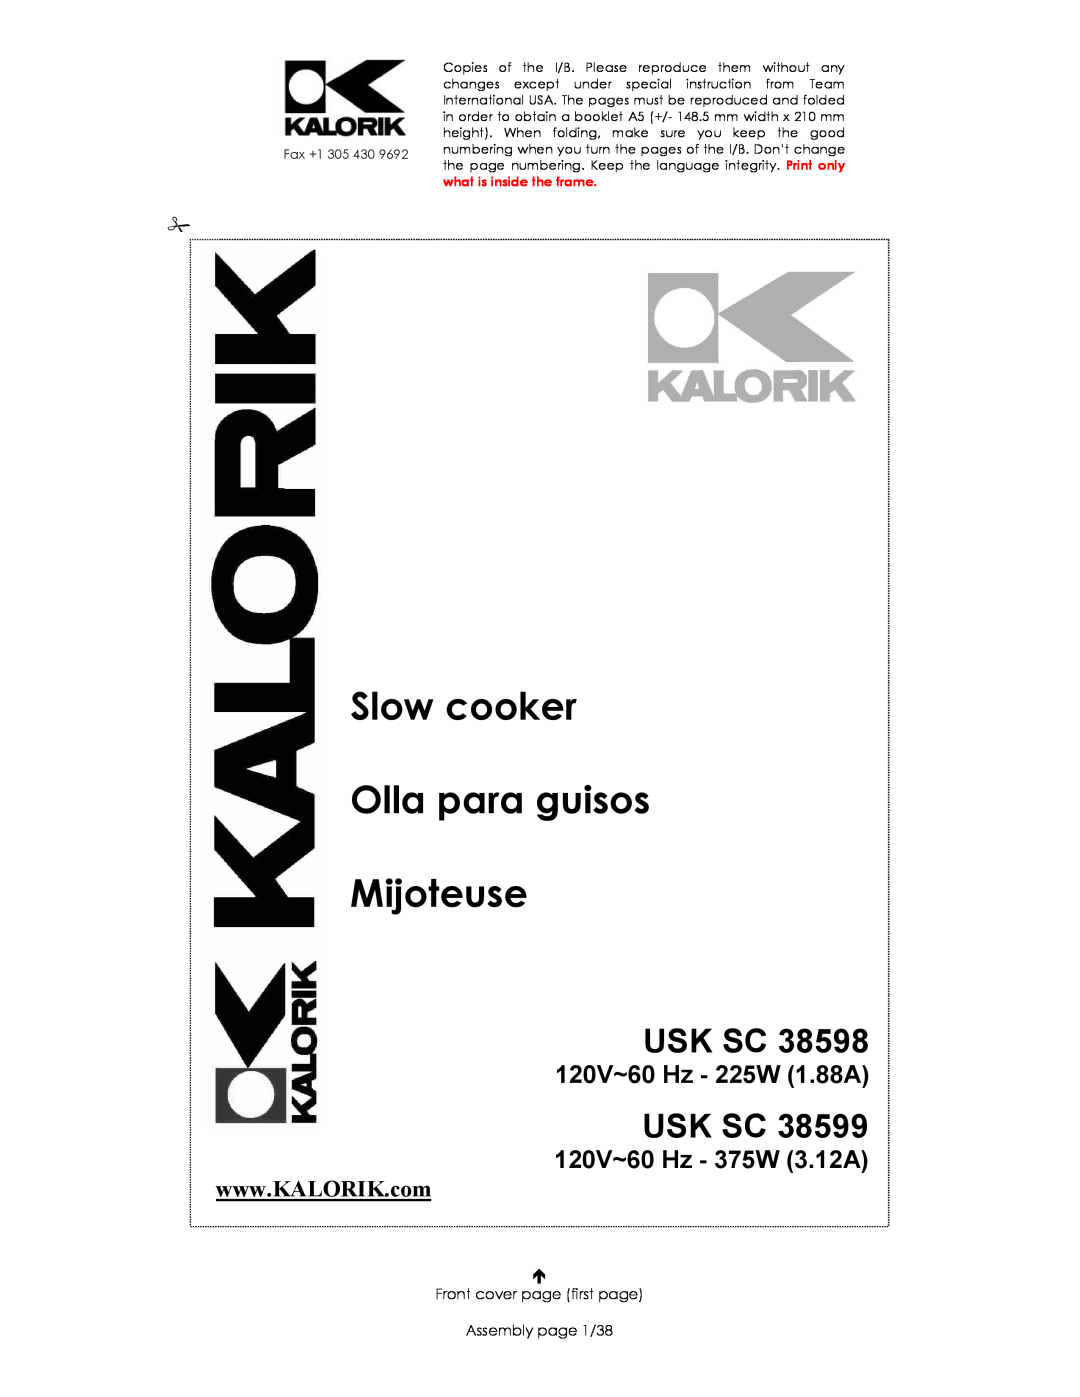 Kalorik 38599 manual Slow cooker Olla para guisos Mijoteuse, Usk Sc, 120V~60 HZ - 225W 1.88A, 120V~60 HZ - 375W 3.12A 